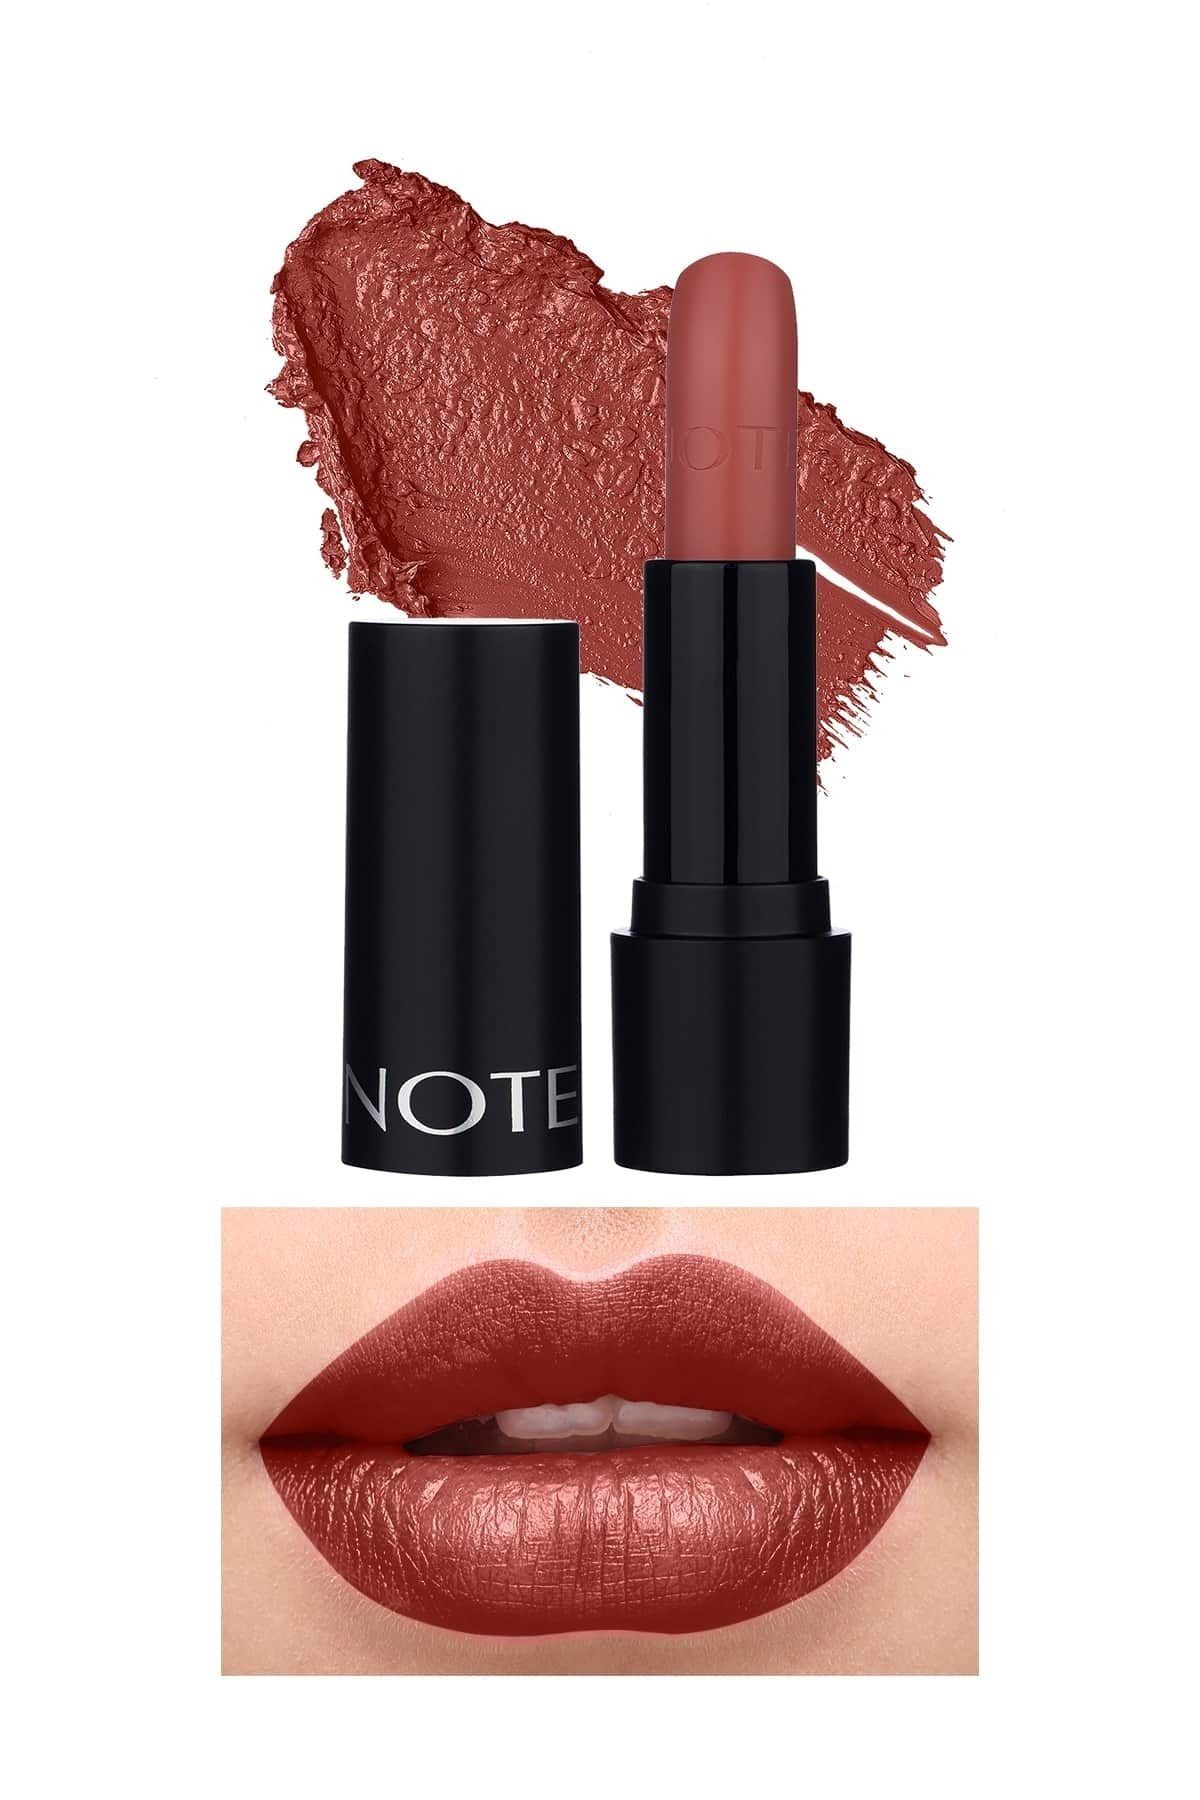 Note Cosmetics Deep Impact Lipstick Kremsi Dokulu Yarı Parlak Ruj 02 Optimistic Rose - Nude